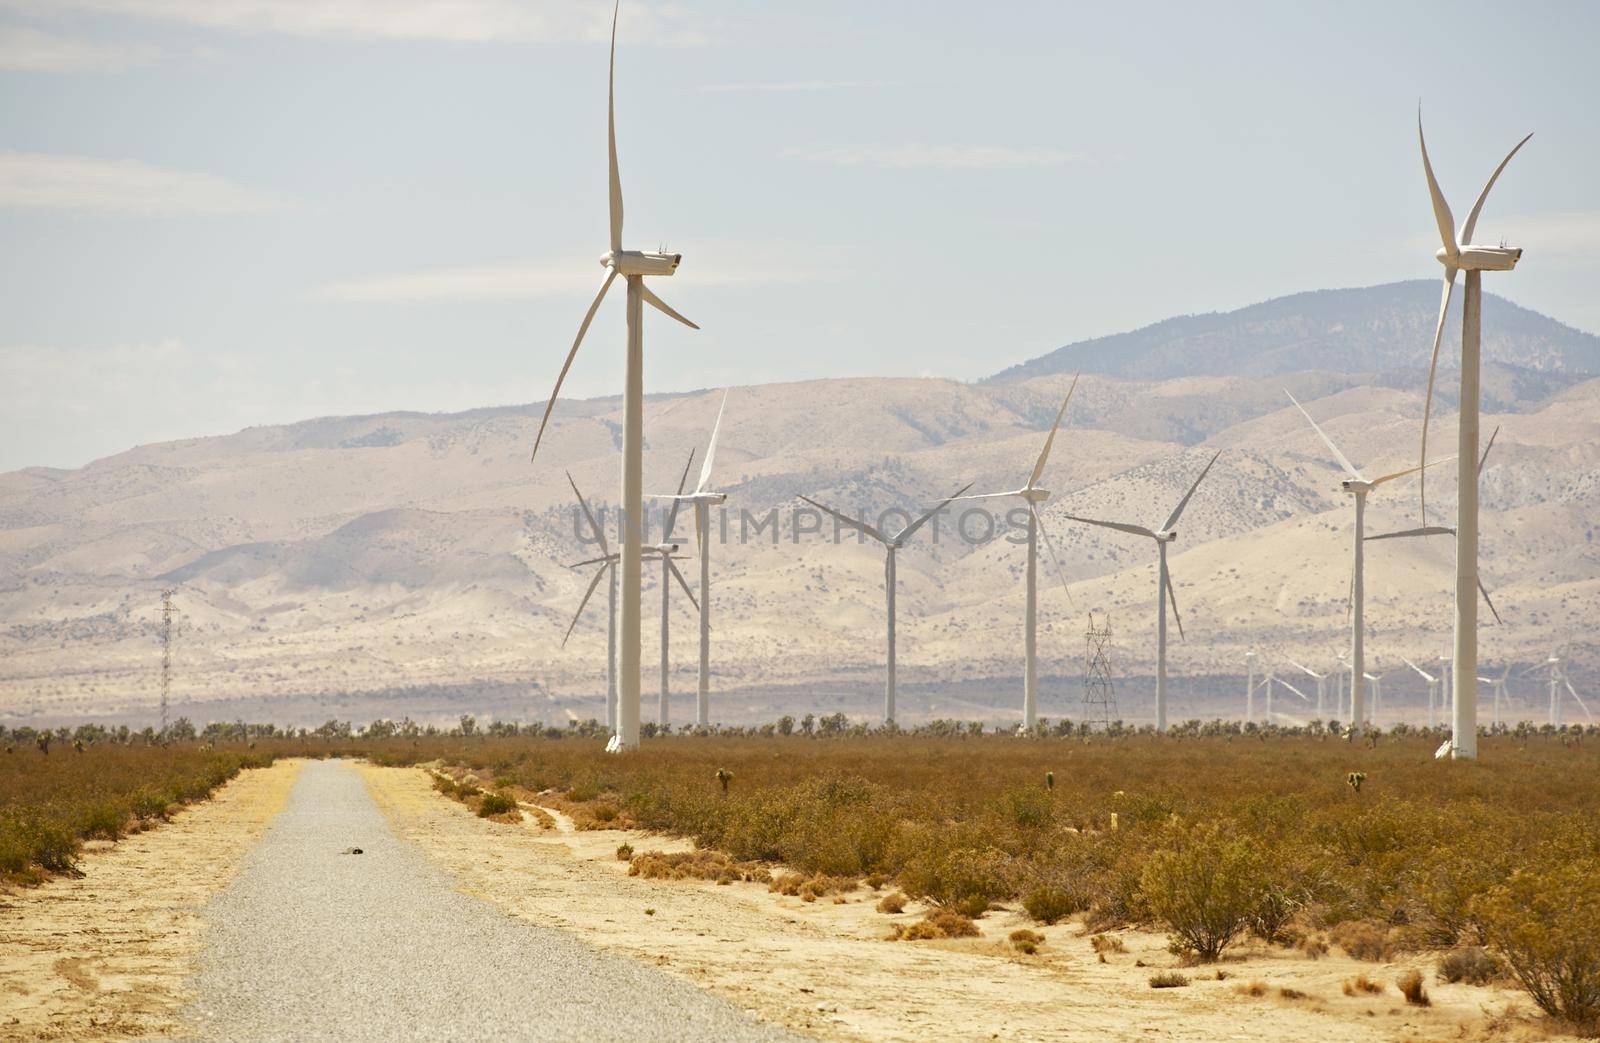 Mojave Desert Road Between Wind Turbines. Mojave California, USA by welcomia